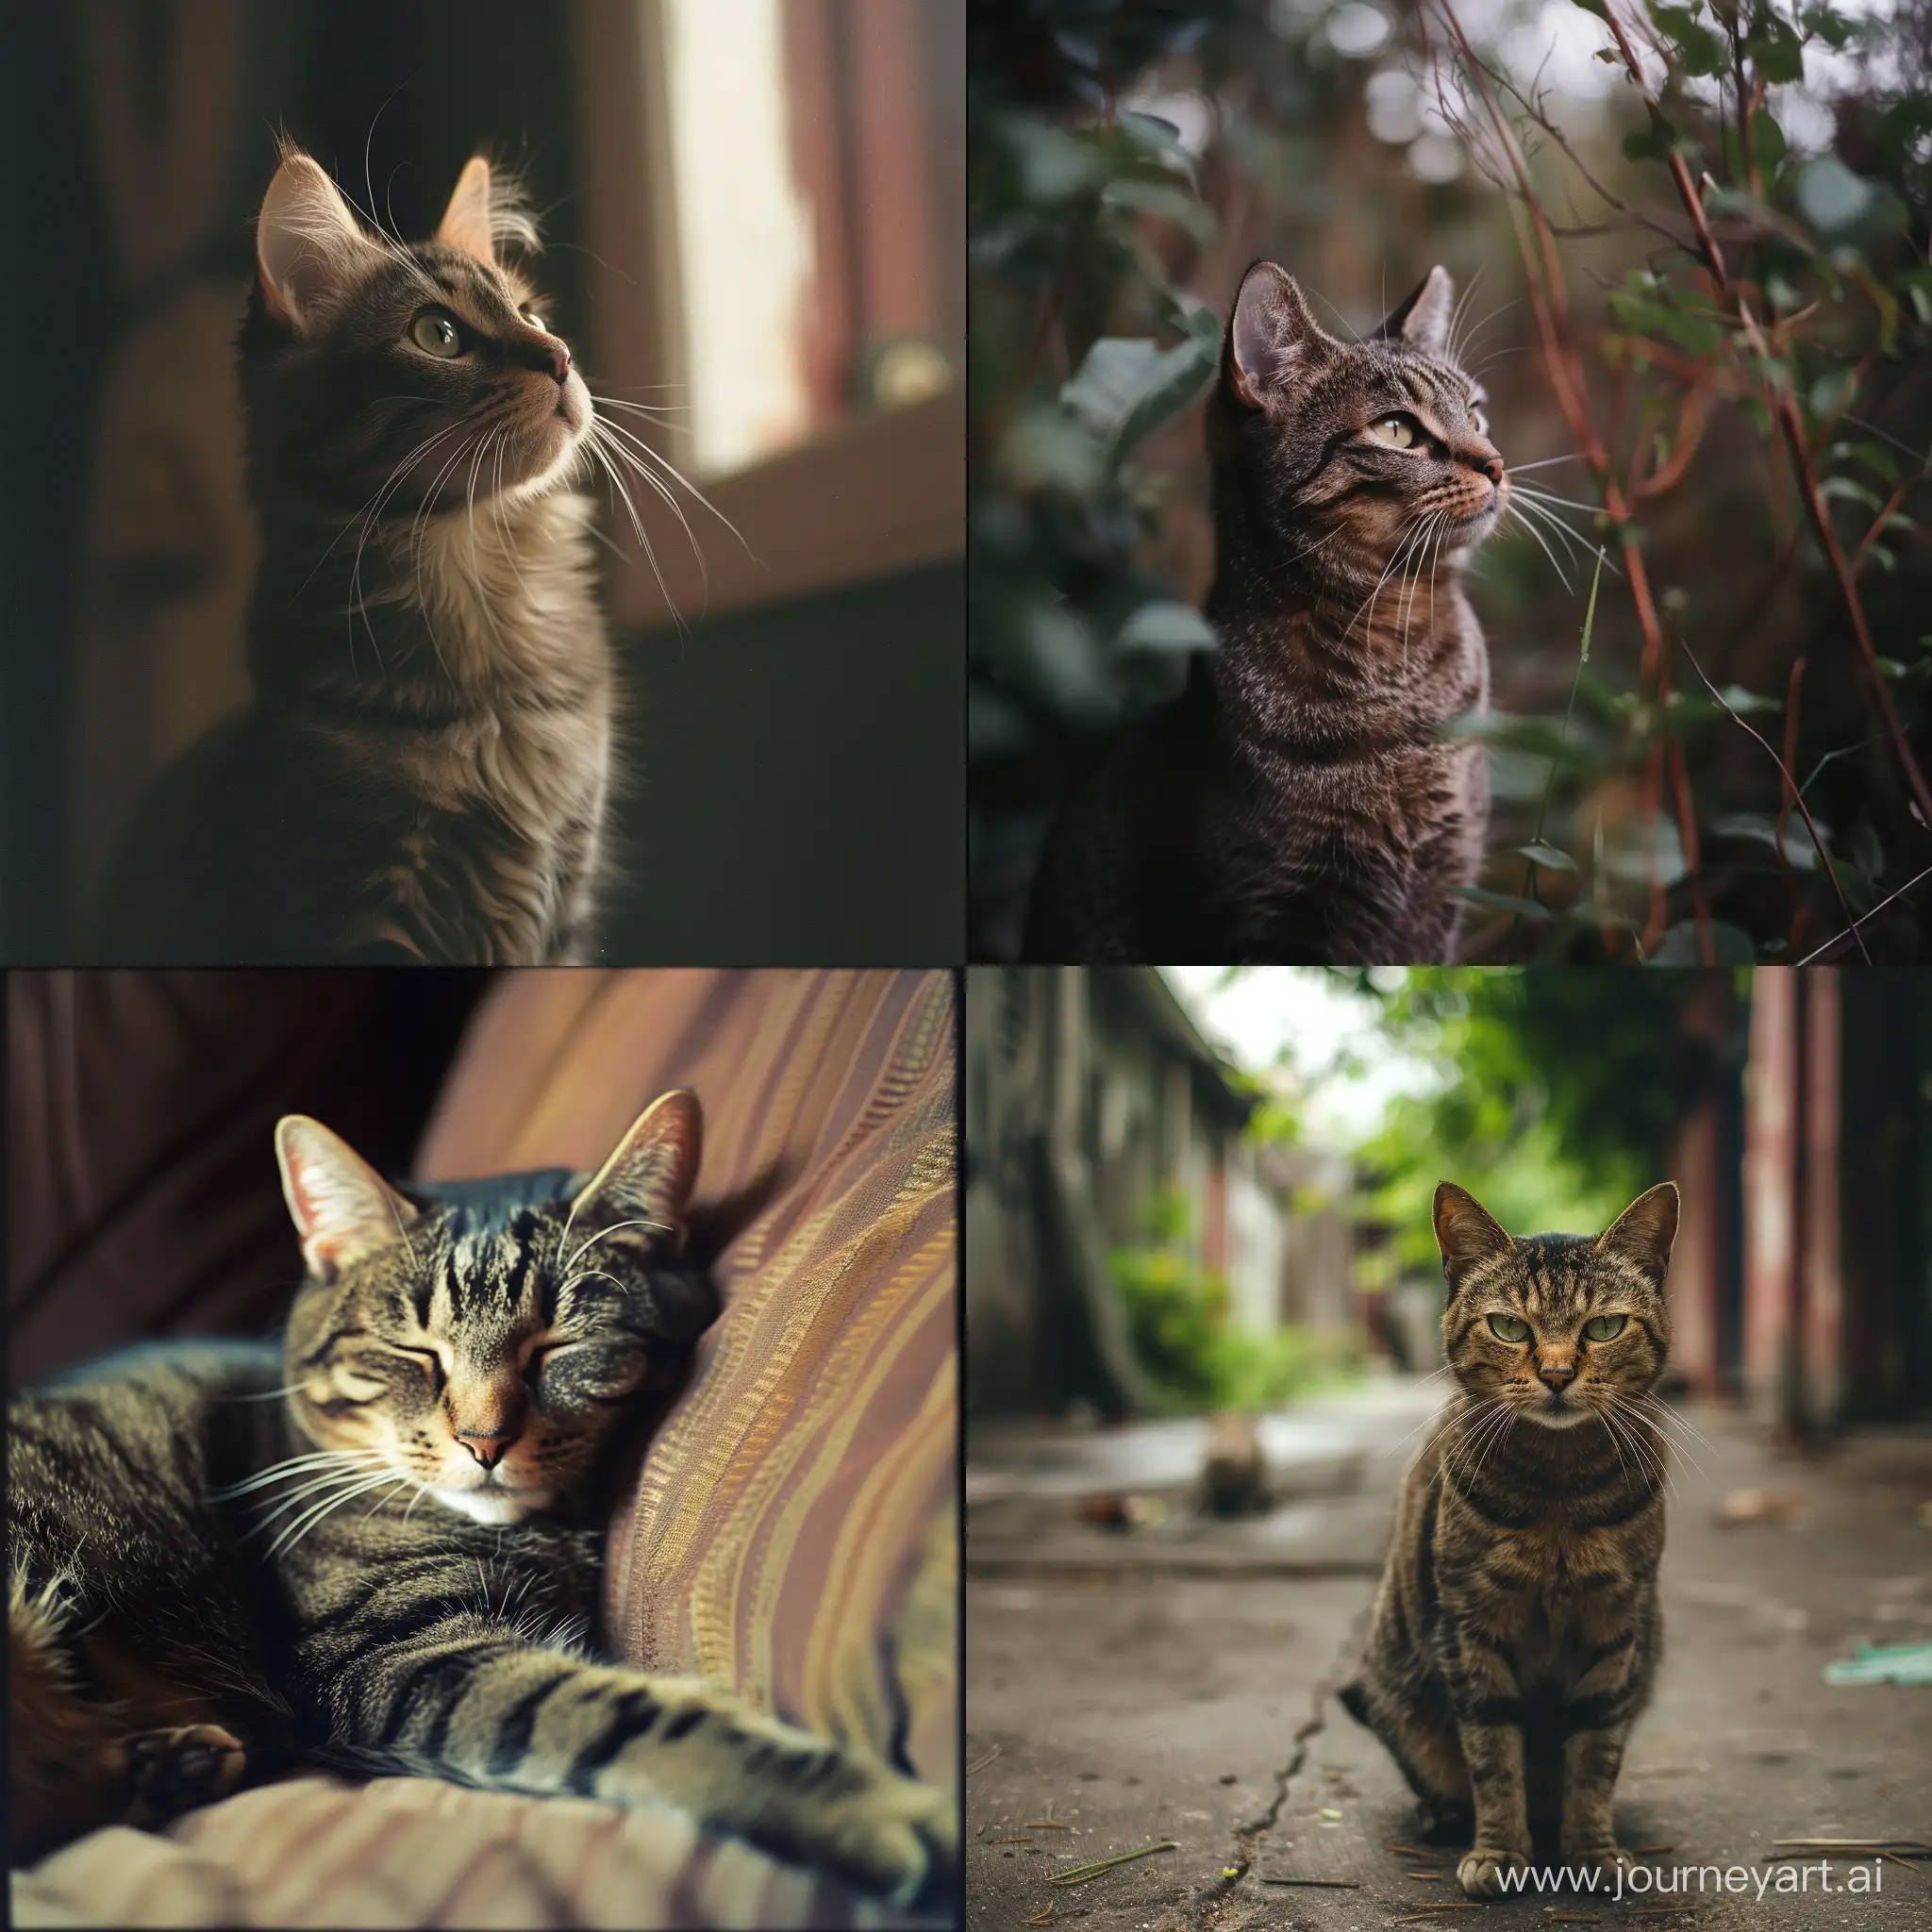 Playful-Cat-Poses-for-Analog-Camera-Photo-Shoot